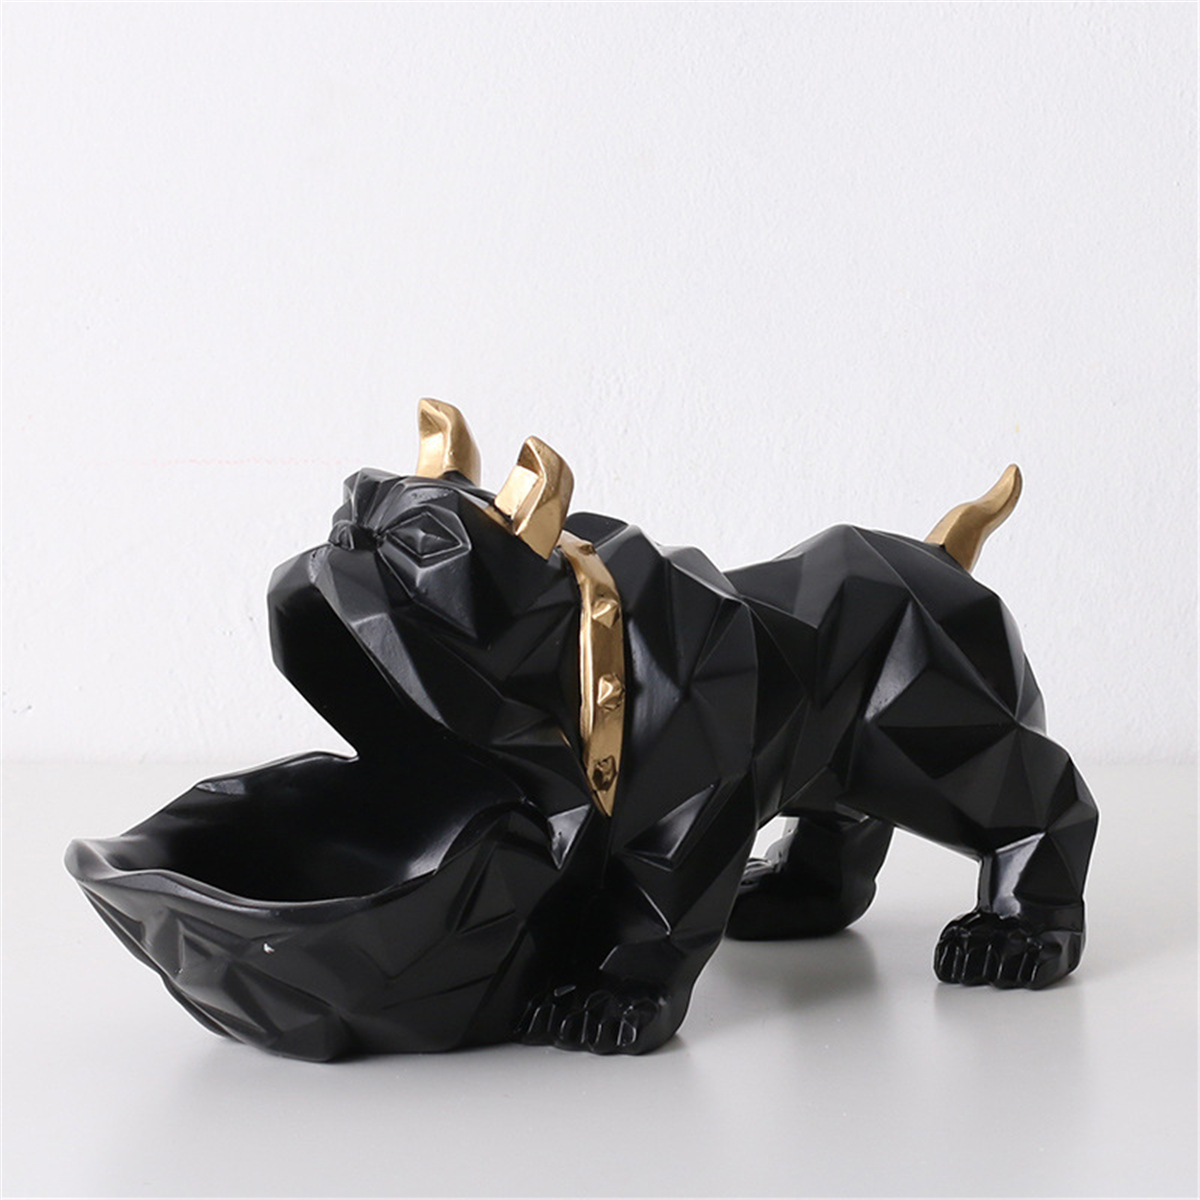 Bulldog-Animal-Sculpture-Puppy-Dog-Statue-Figure-Ornament-Gift-Decorations-1464229-4